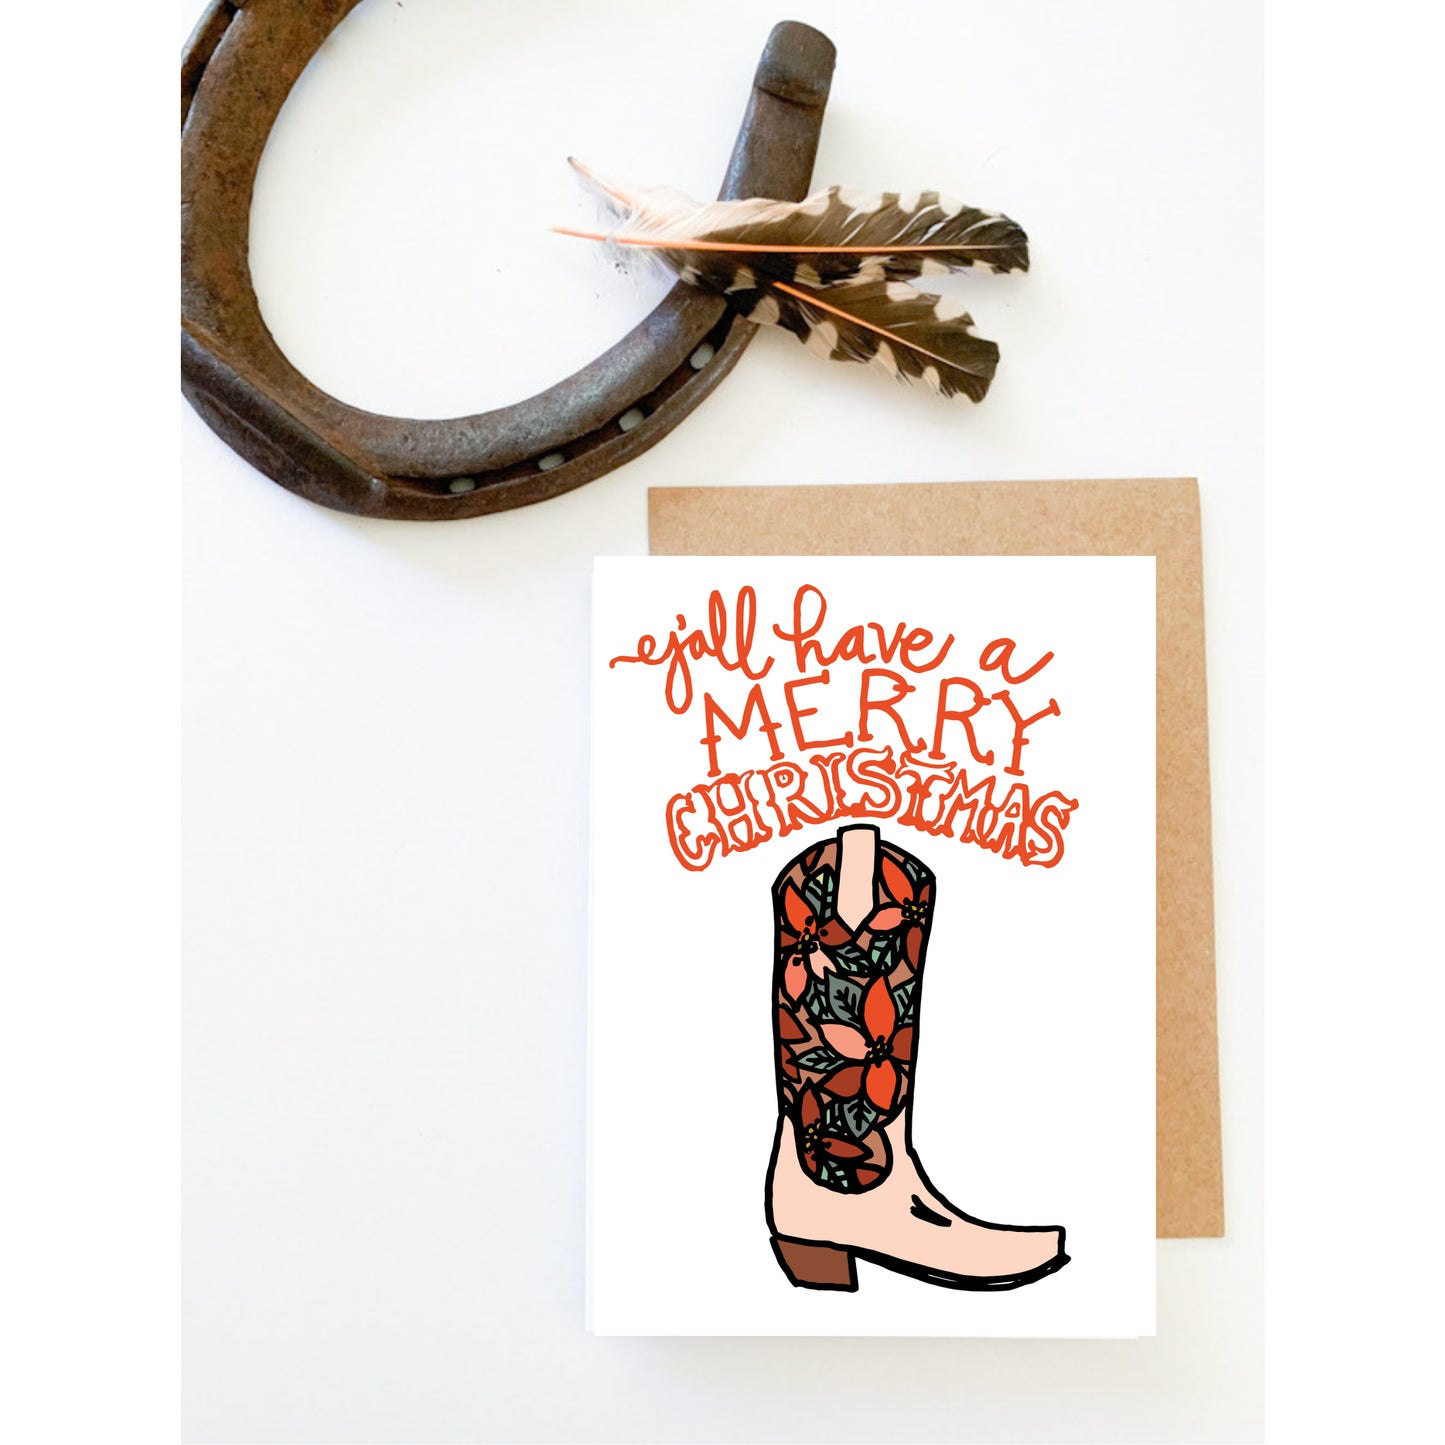 Western Cowgirl Christmas Card, Poinsettia Holiday Card